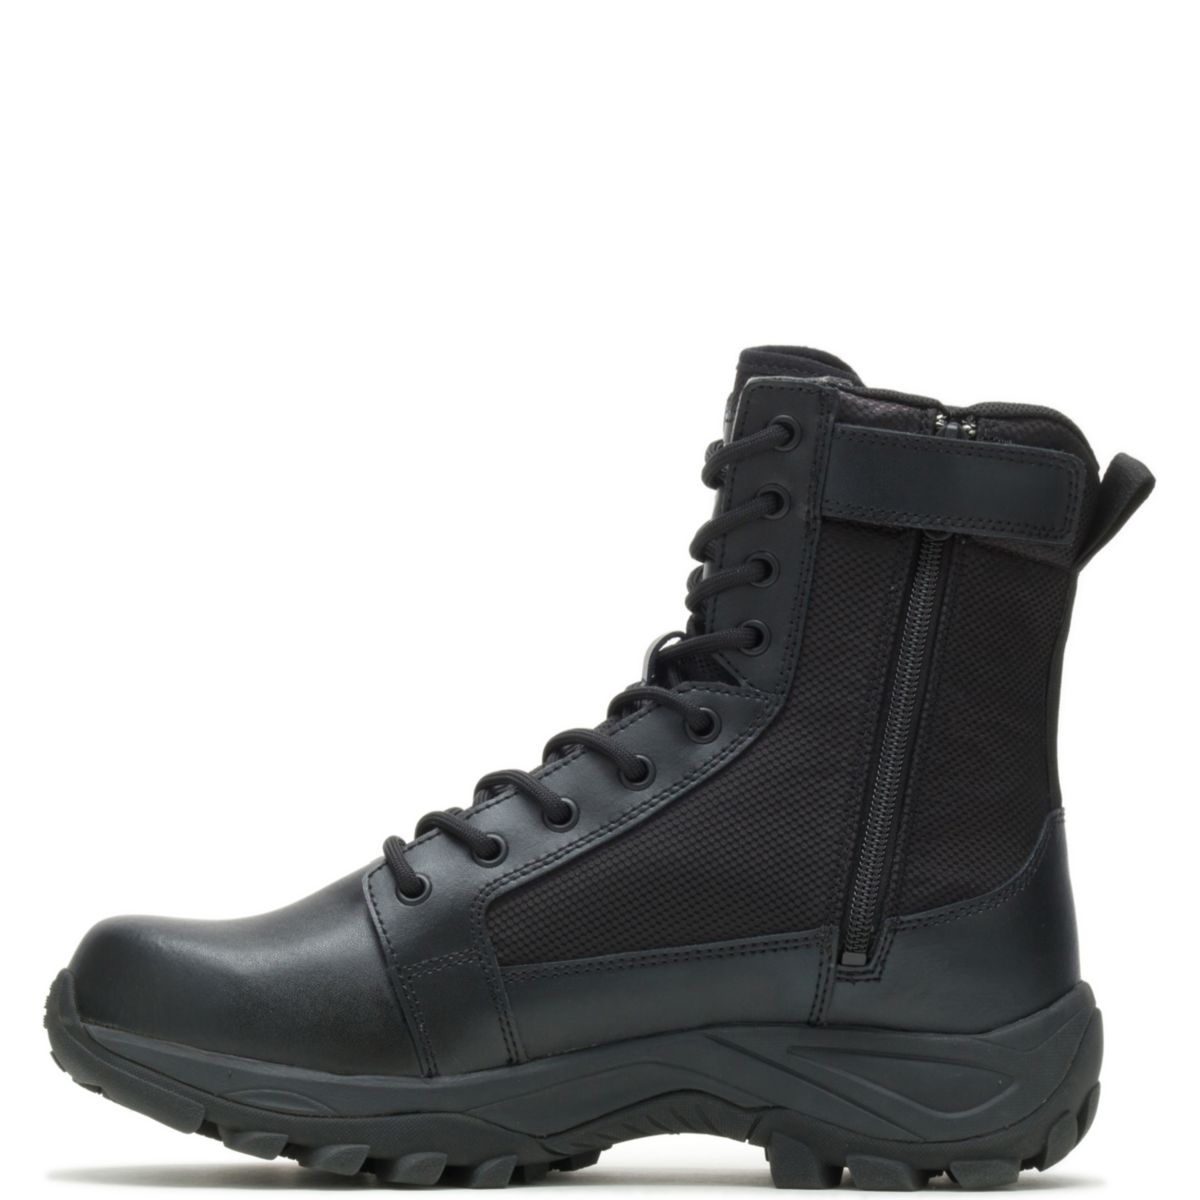 Bates Men's Fuse 8-inch Side Zip Waterproof Boot Black - E06508 BLACK - BLACK, 8.5